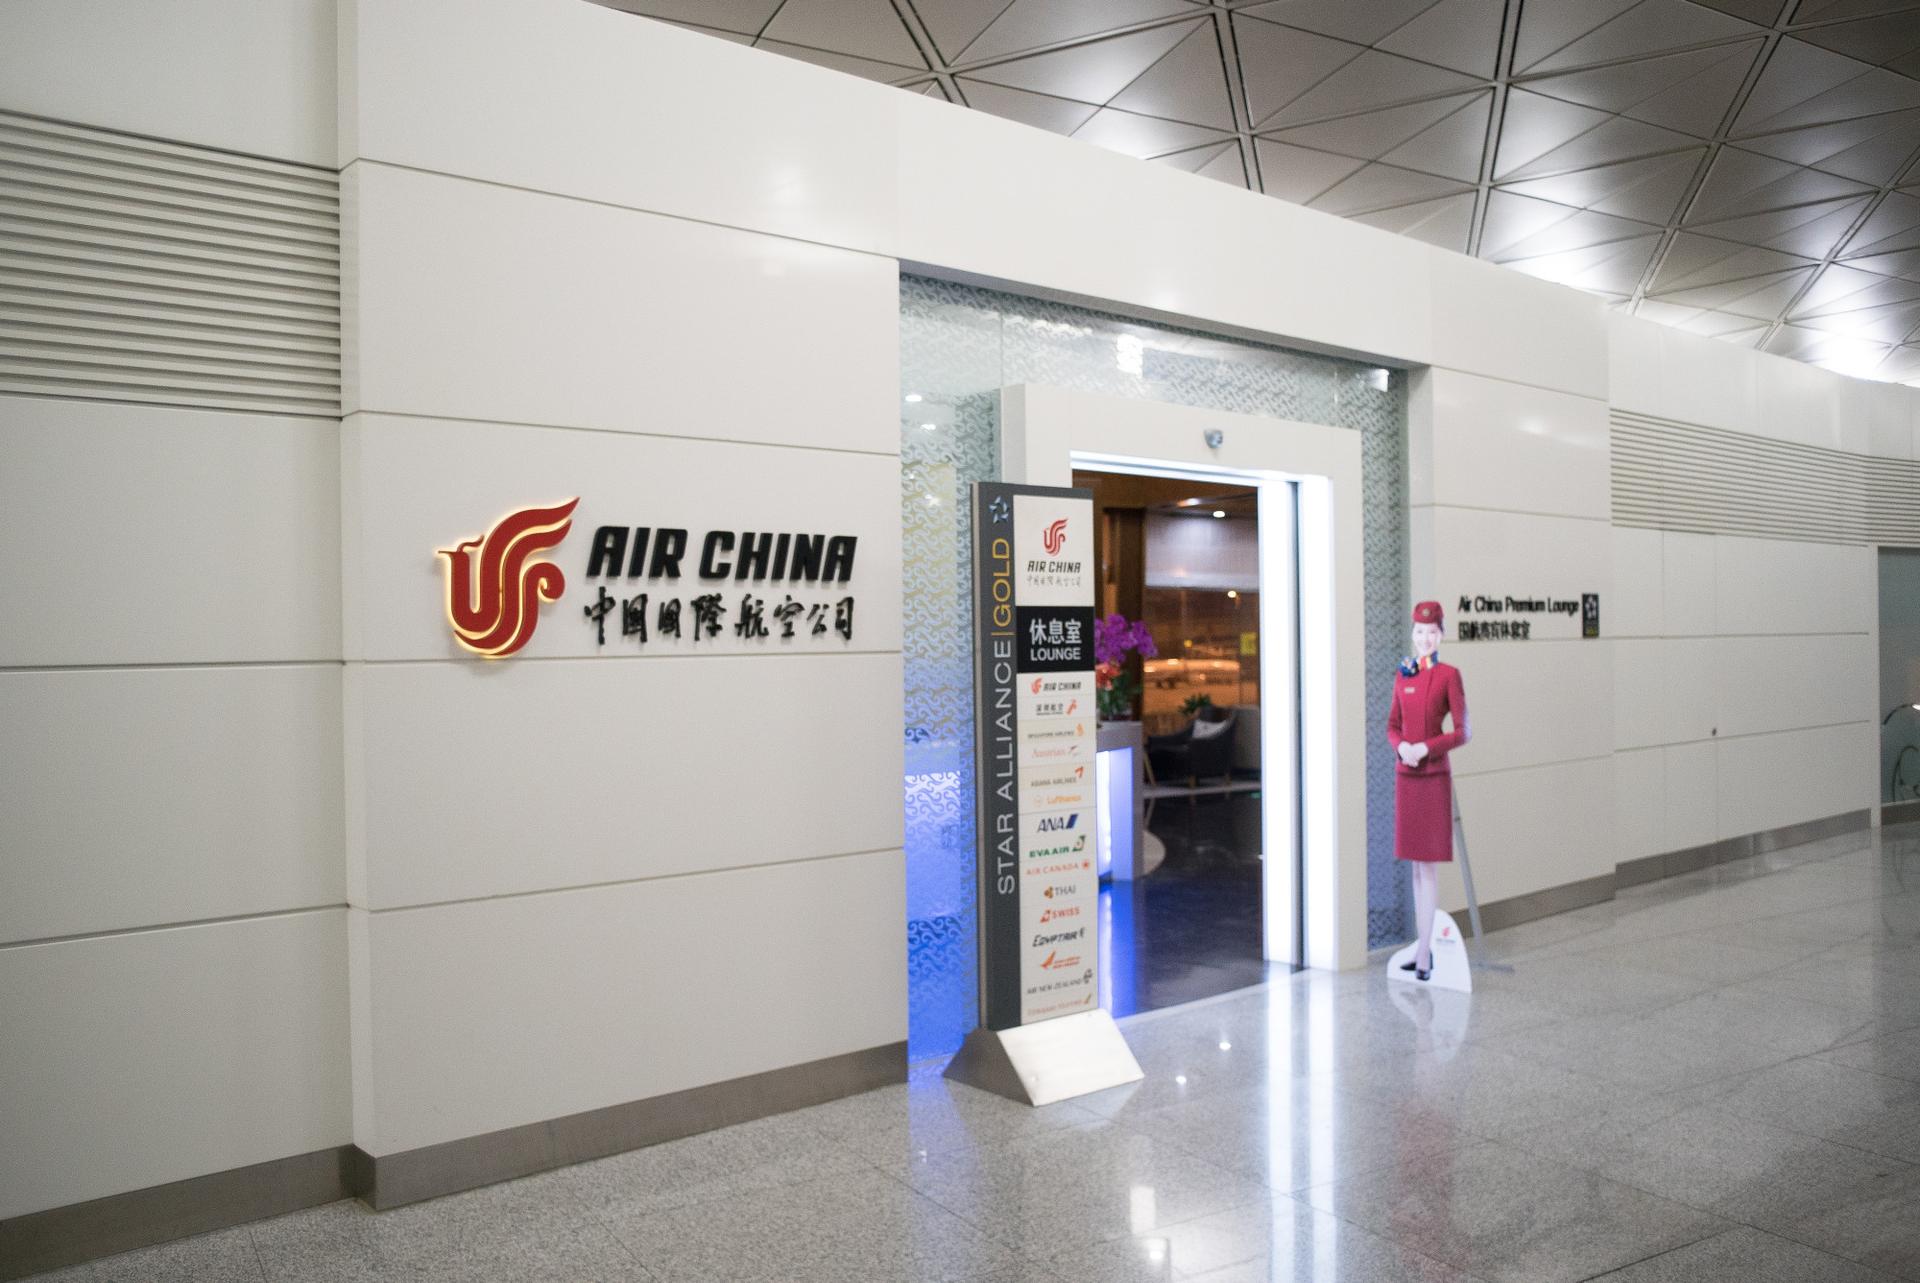 Air China Lounge (Gate 117) image 5 of 20